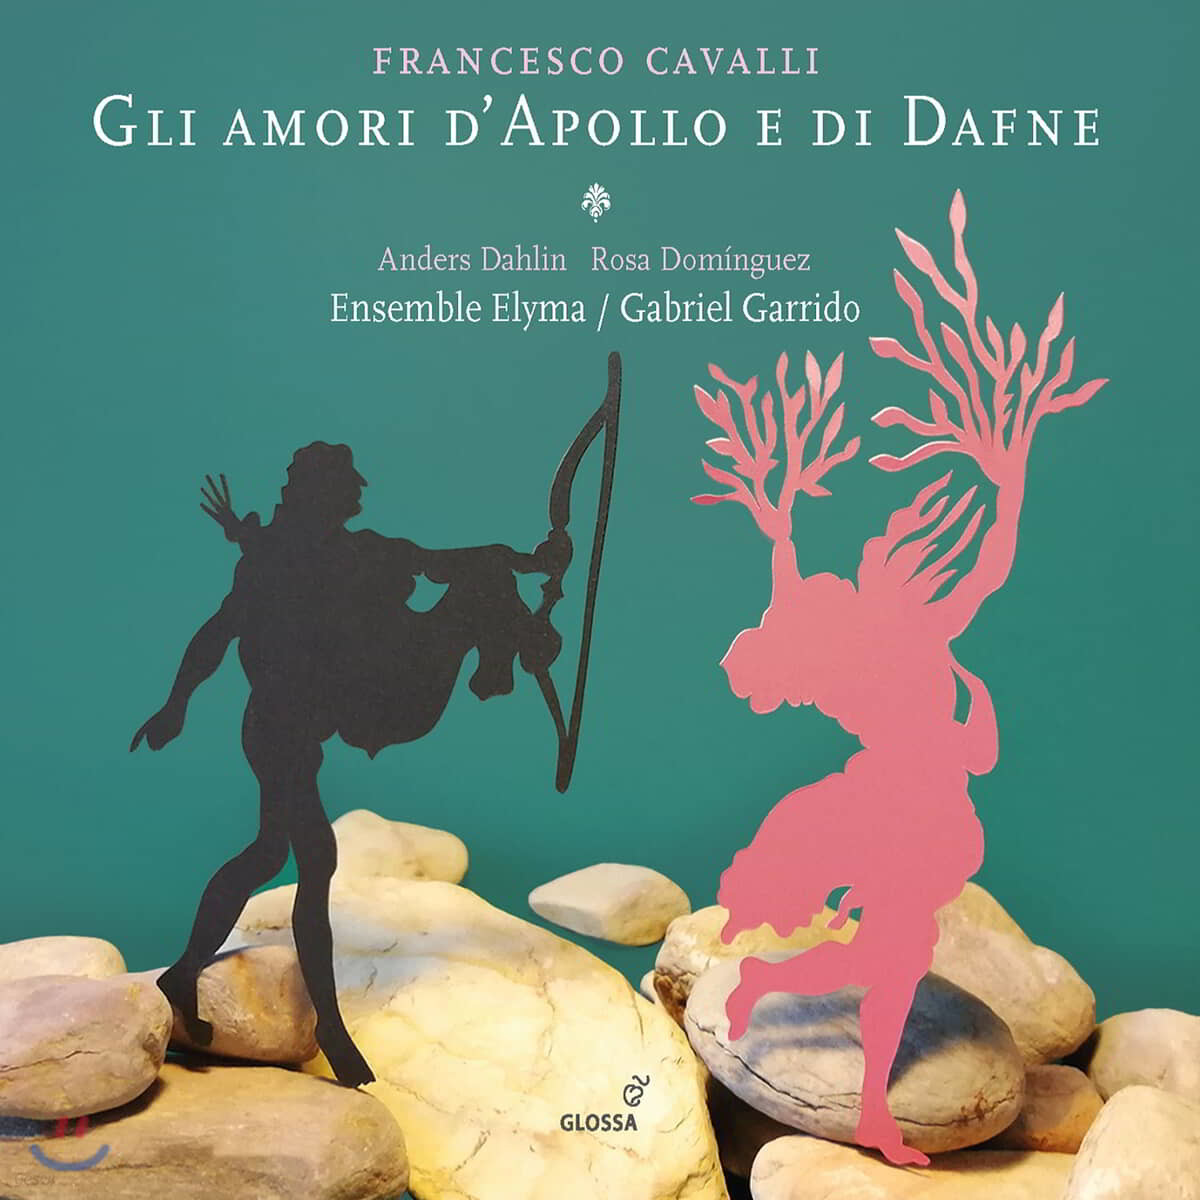 Gabriel Garrido 프란체스코 카발리: 오페라 '아폴로와 다프네의 사랑' (Francesco Cavalli: Gli amori d’Apollo e di Dafne)